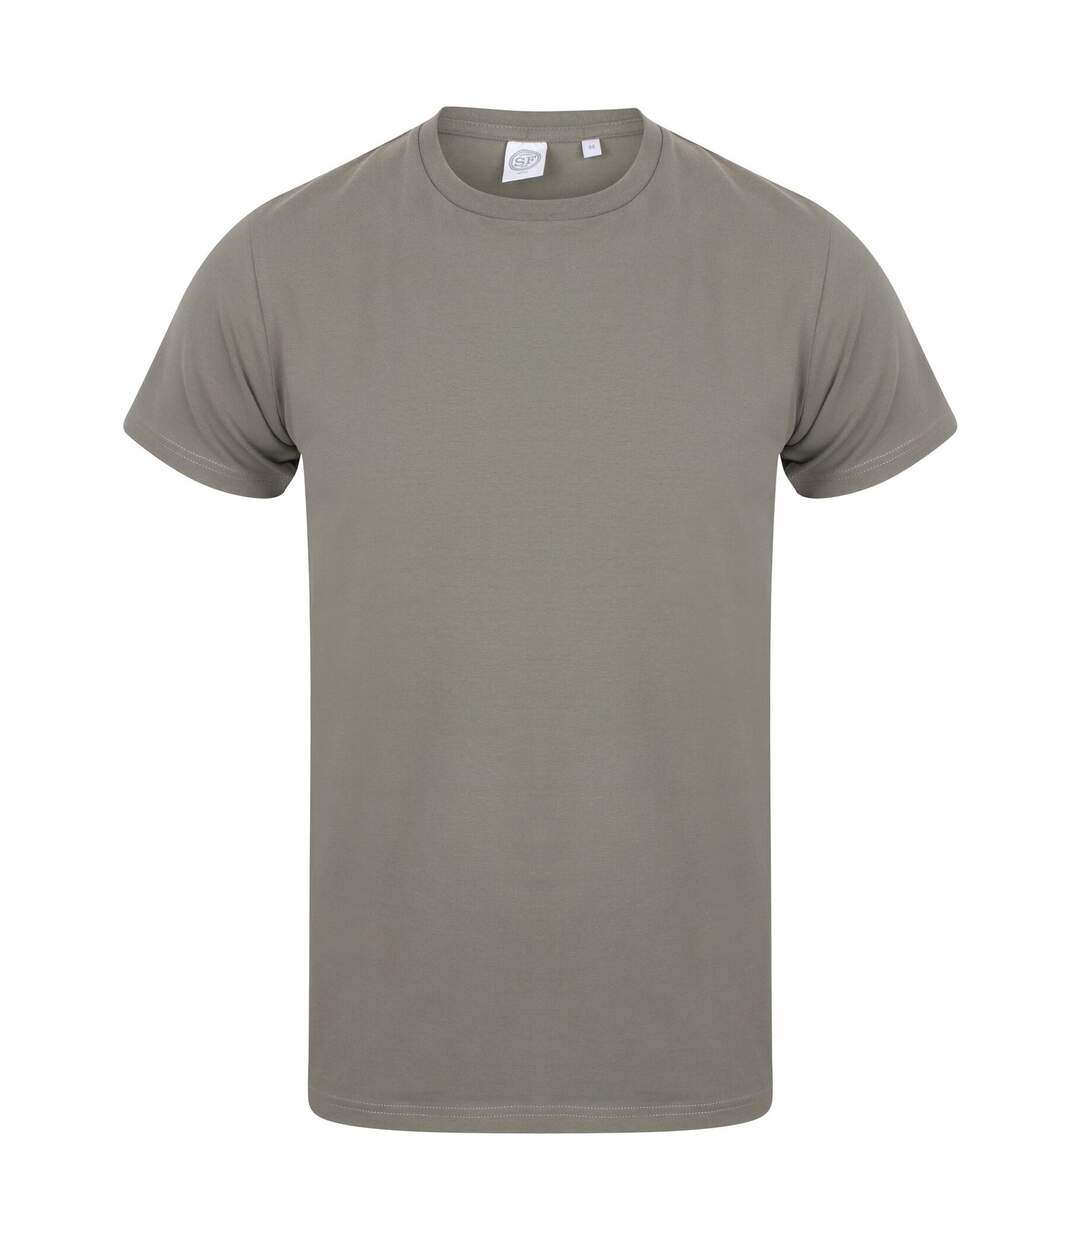 Skinni Fit Men Mens Feel Good Stretch Short Sleeve T-Shirt (Khaki)